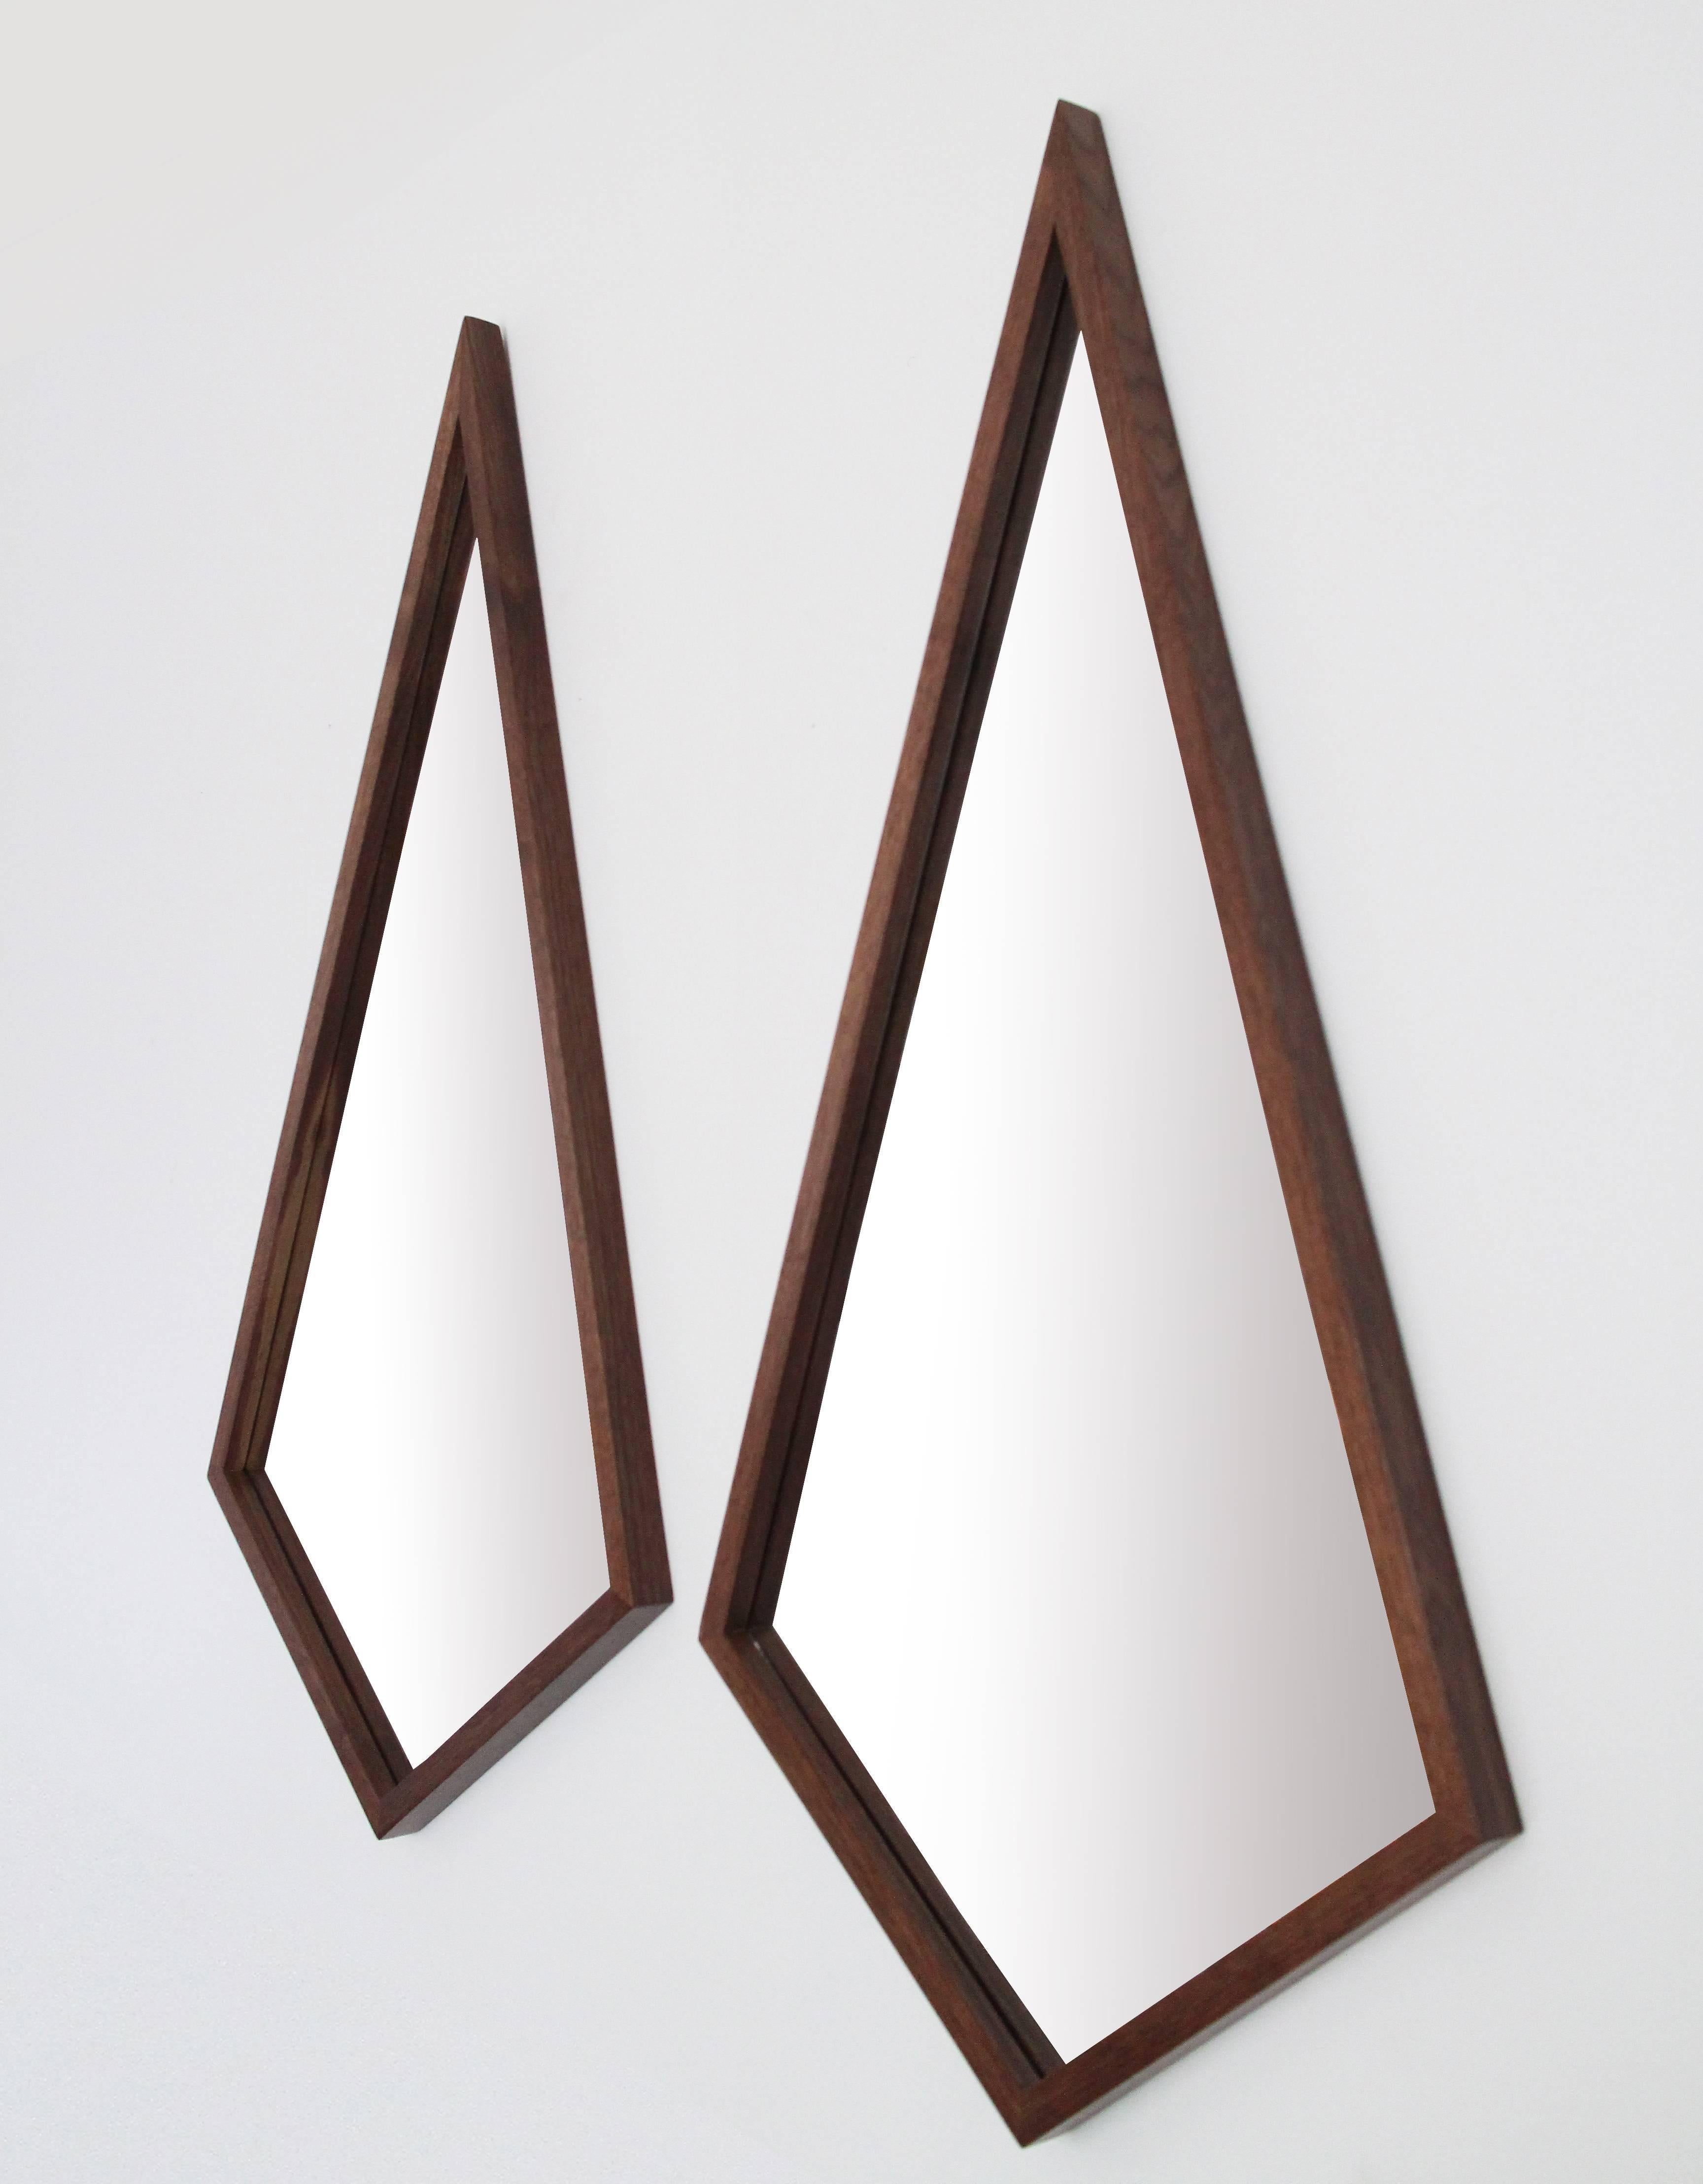 The “Trio Geometric Mirrors